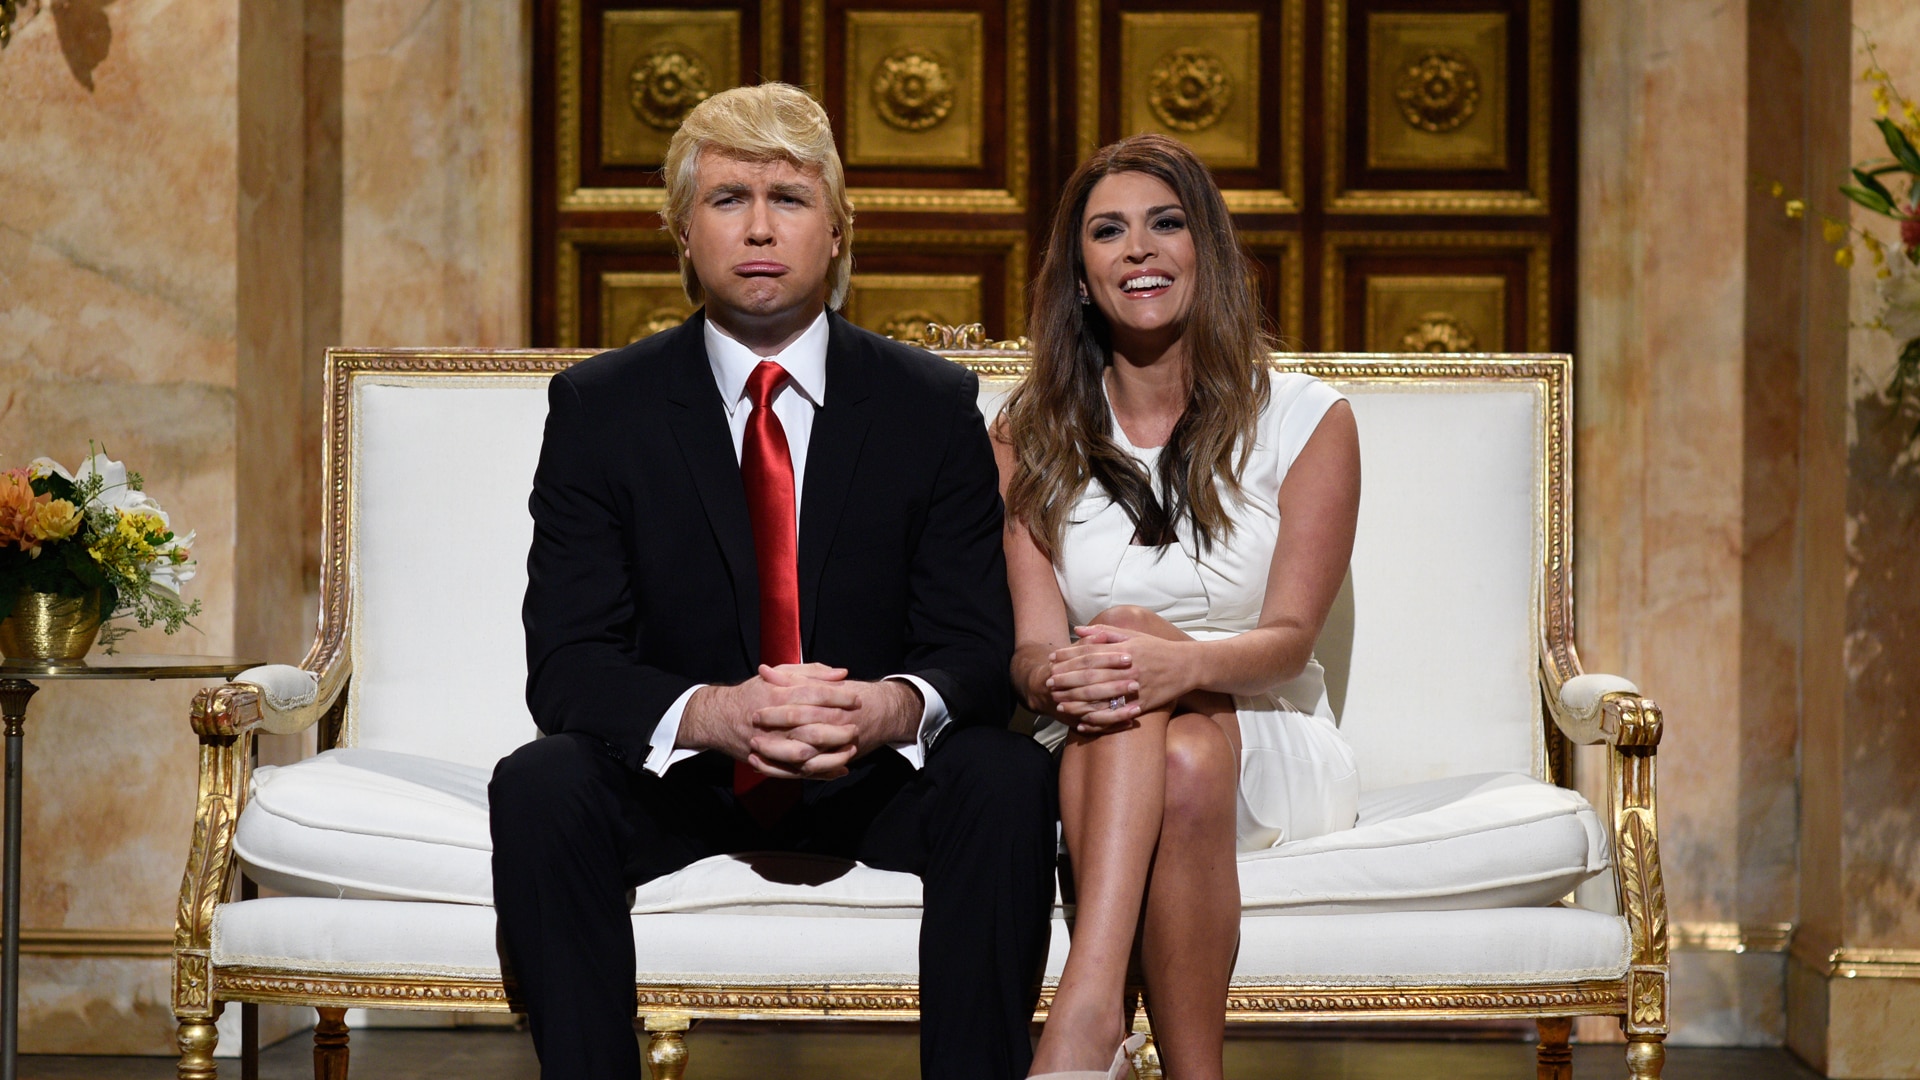 Watch Saturday Night Live Highlight: Donald and Melania Trump Cold Open - NBC.com1920 x 1080